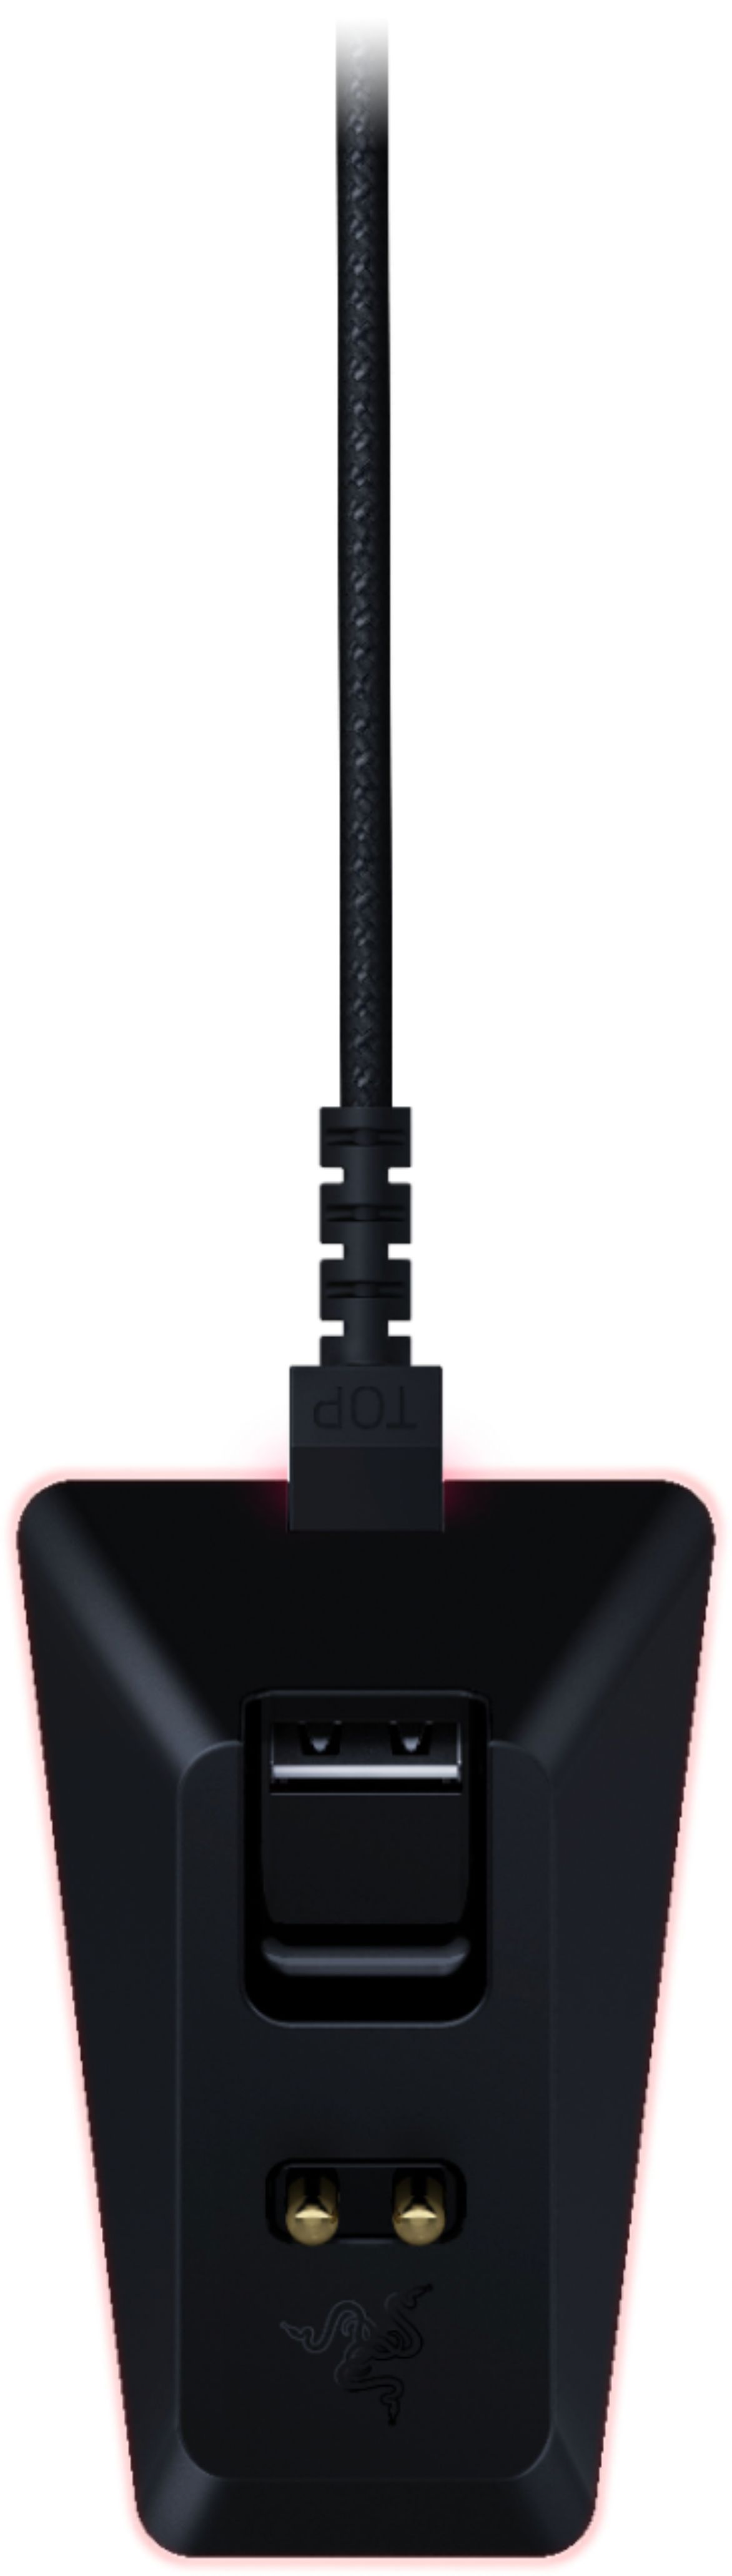 PC/タブレット PC周辺機器 Mouse Dock Chroma: Wireless Charging Dock with Razer Chroma RGB 